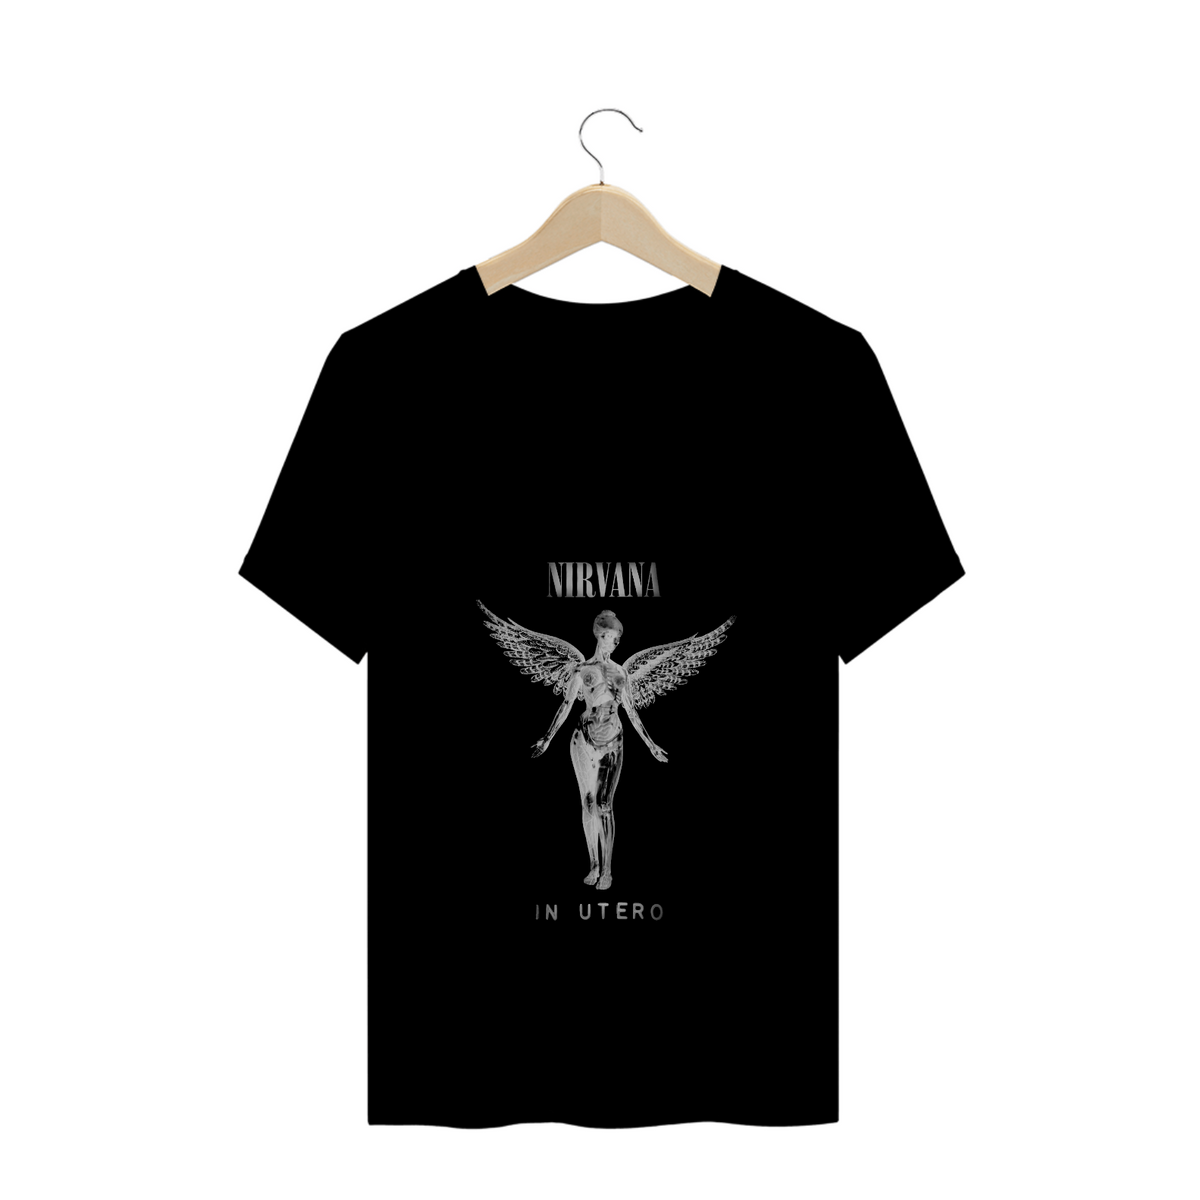 Nome do produto: Camisa Nirvana - In Utero